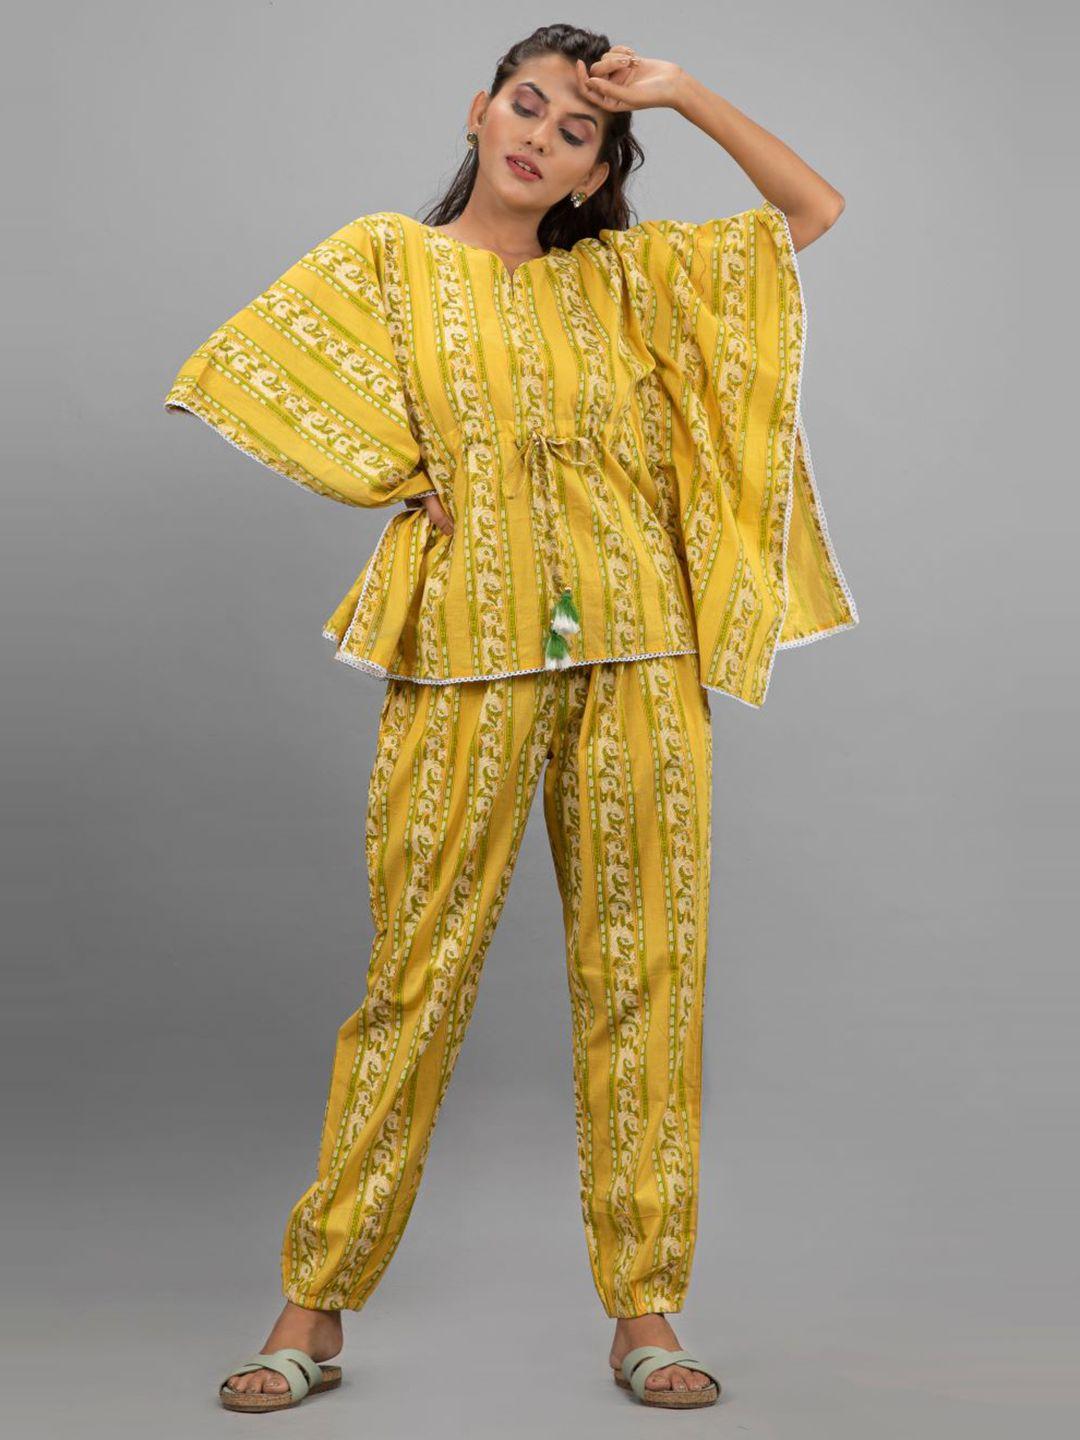 prakrtee women yellow & green printed pure cotton night suit